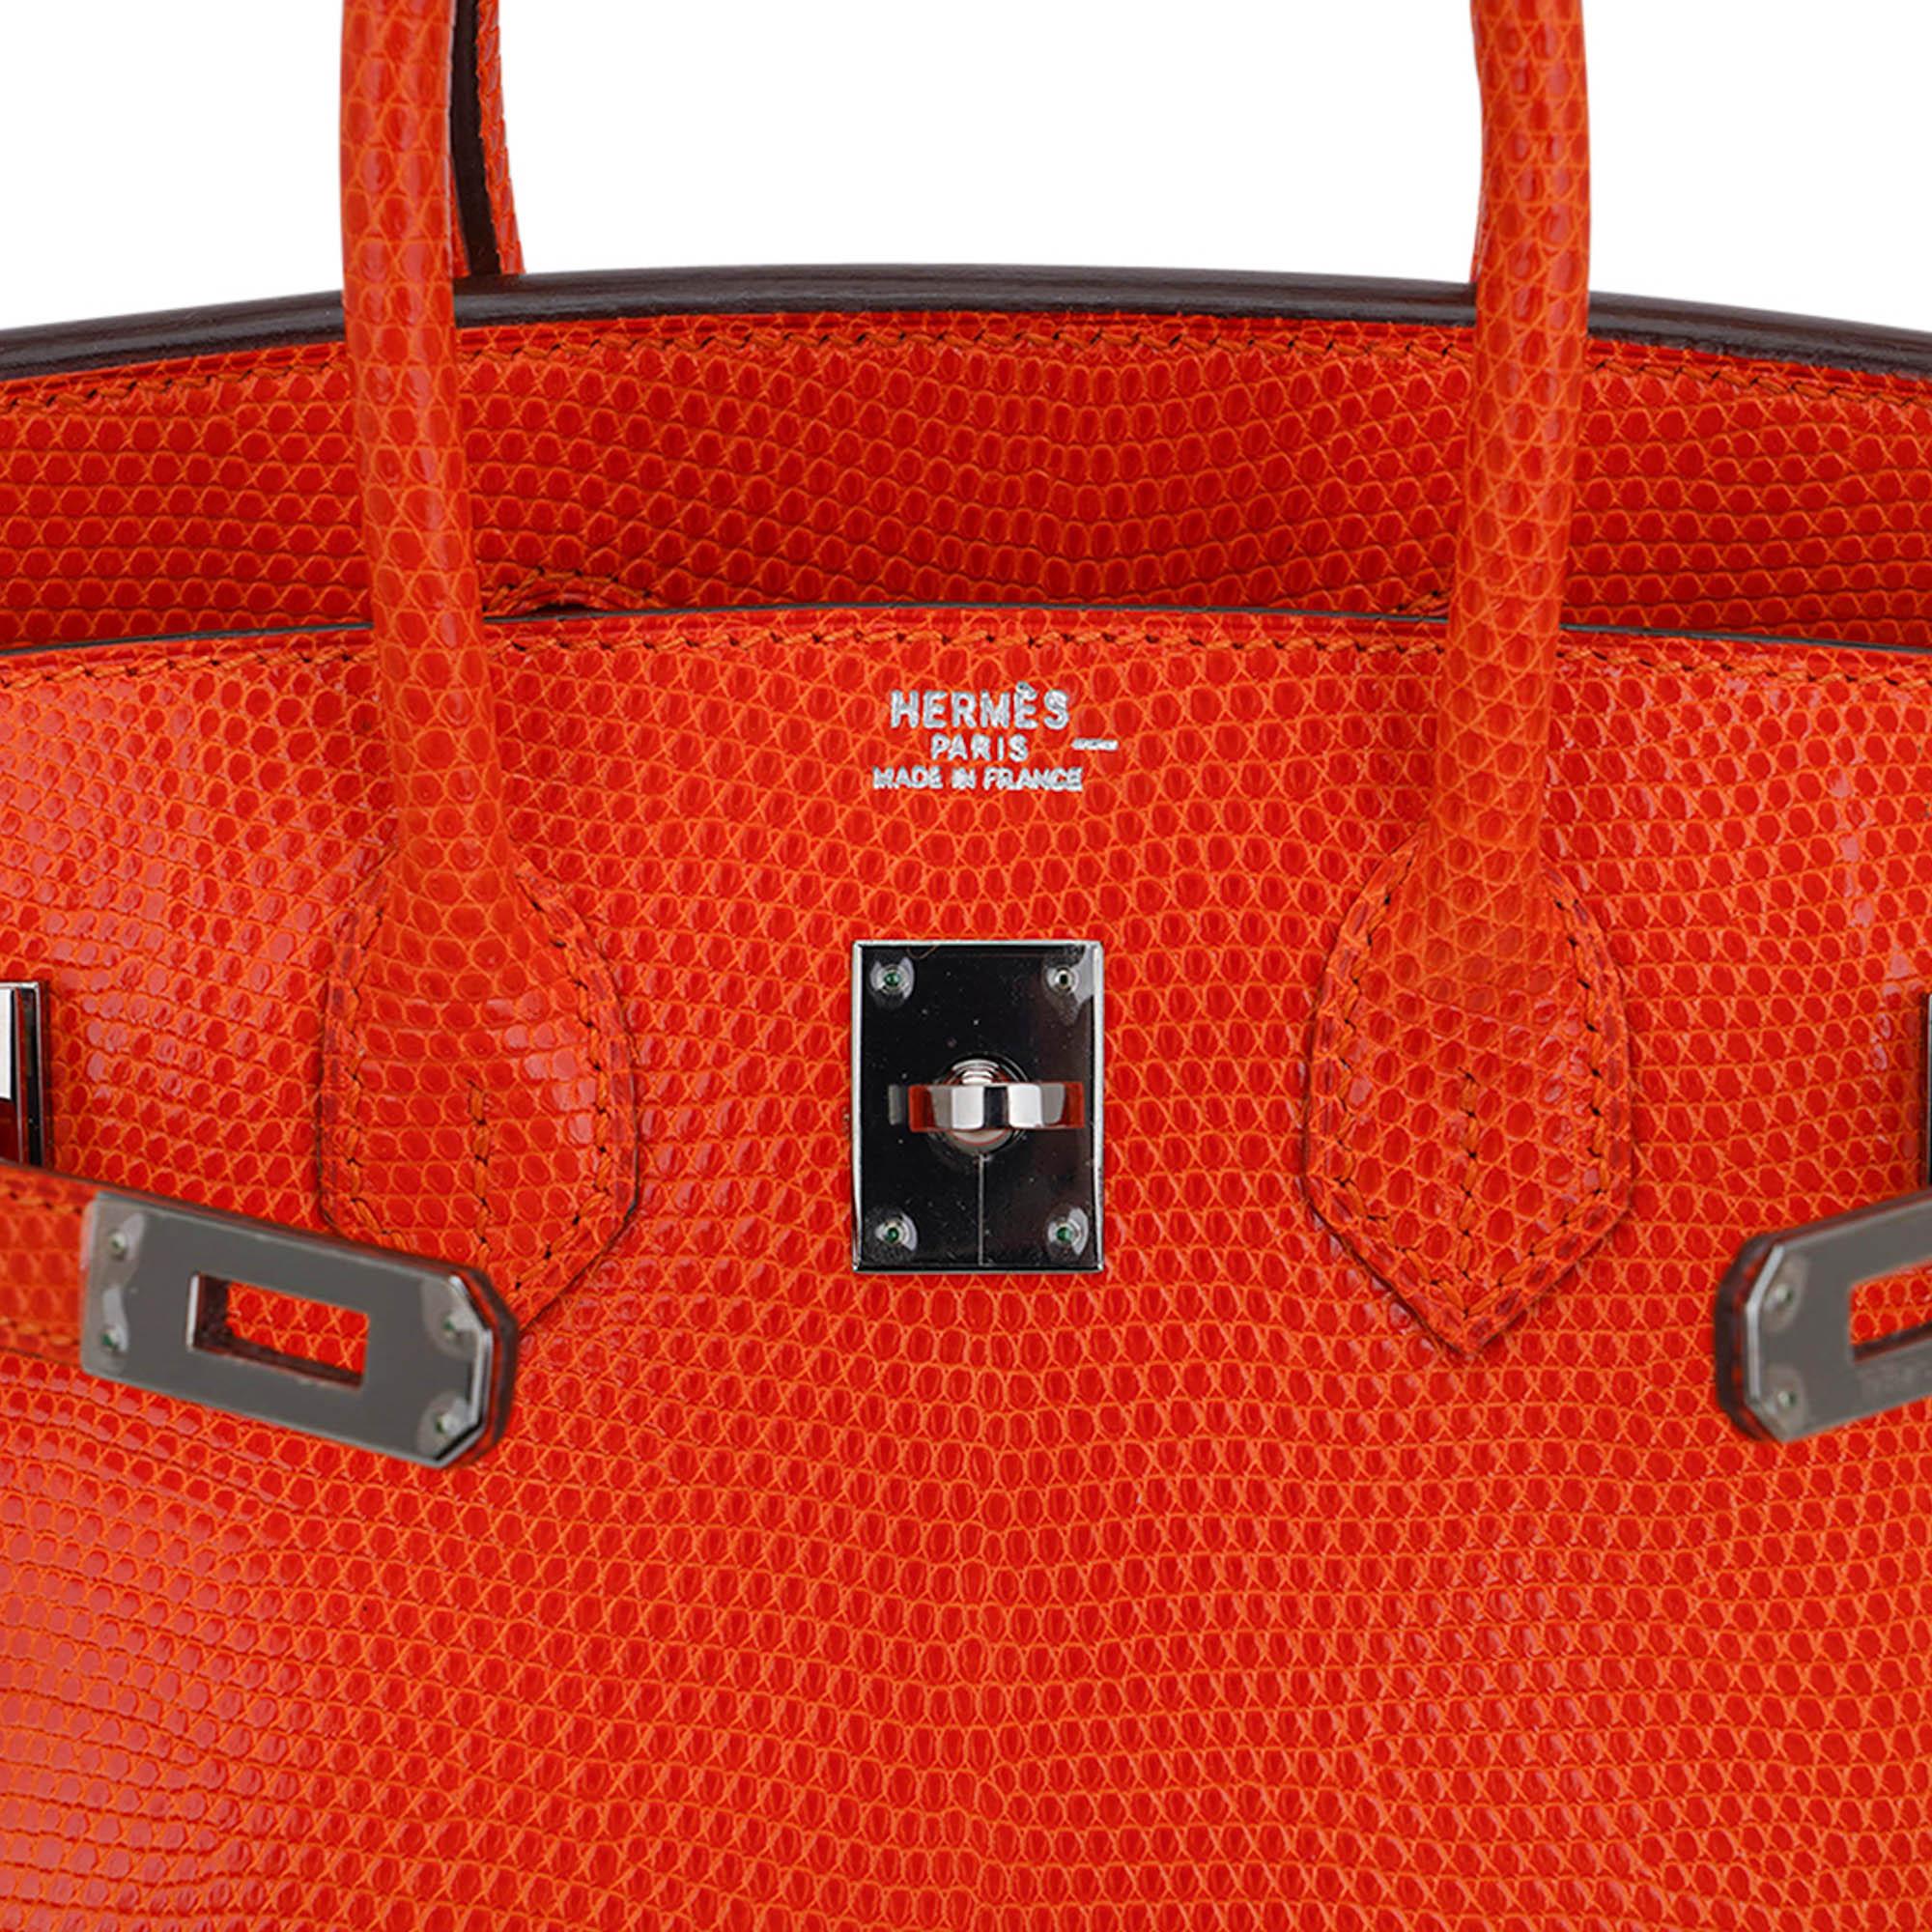 Hermes Birkin 25 Orange Tangerine Lizard Limited Edition Bag Ruthenium Hardware For Sale 5